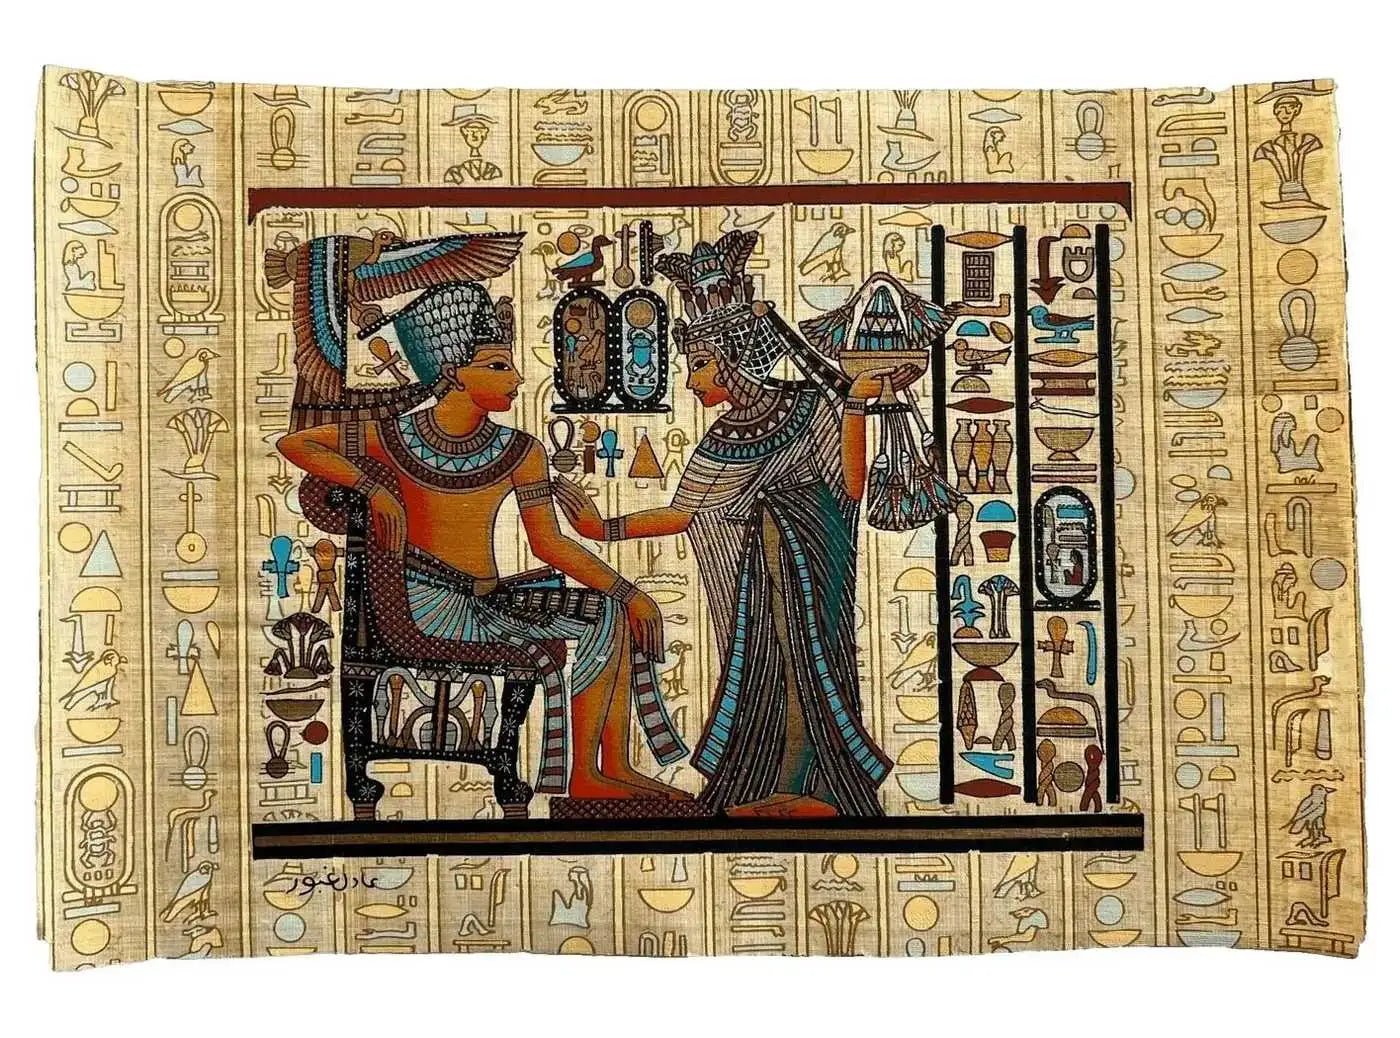 Tutankhamun Receives Flowers from Ankhesenamen as A Sign of Love in A Garden - Scene from Golden Shrine Tutankhamun's Tomb - Papyrus Art